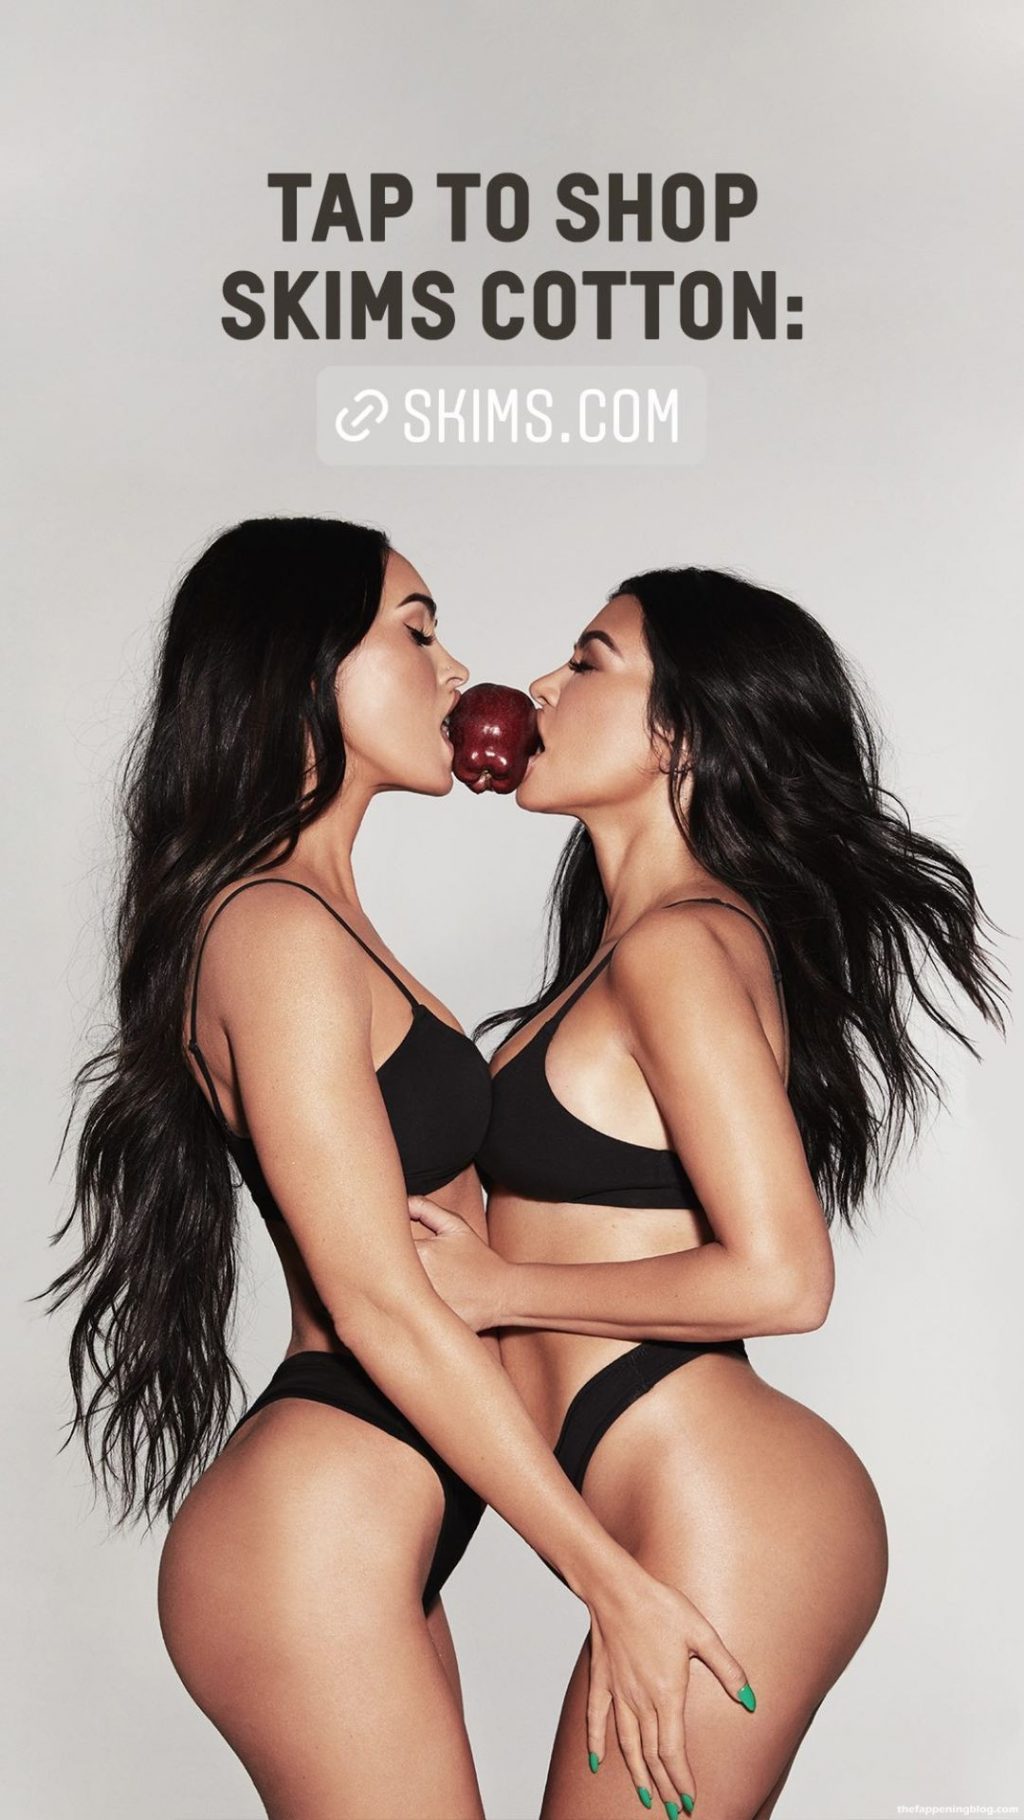 Megan Fox And Kourtney Kardashian Sexy &amp; Topless – SKIMS (31 Photos) [Updated]